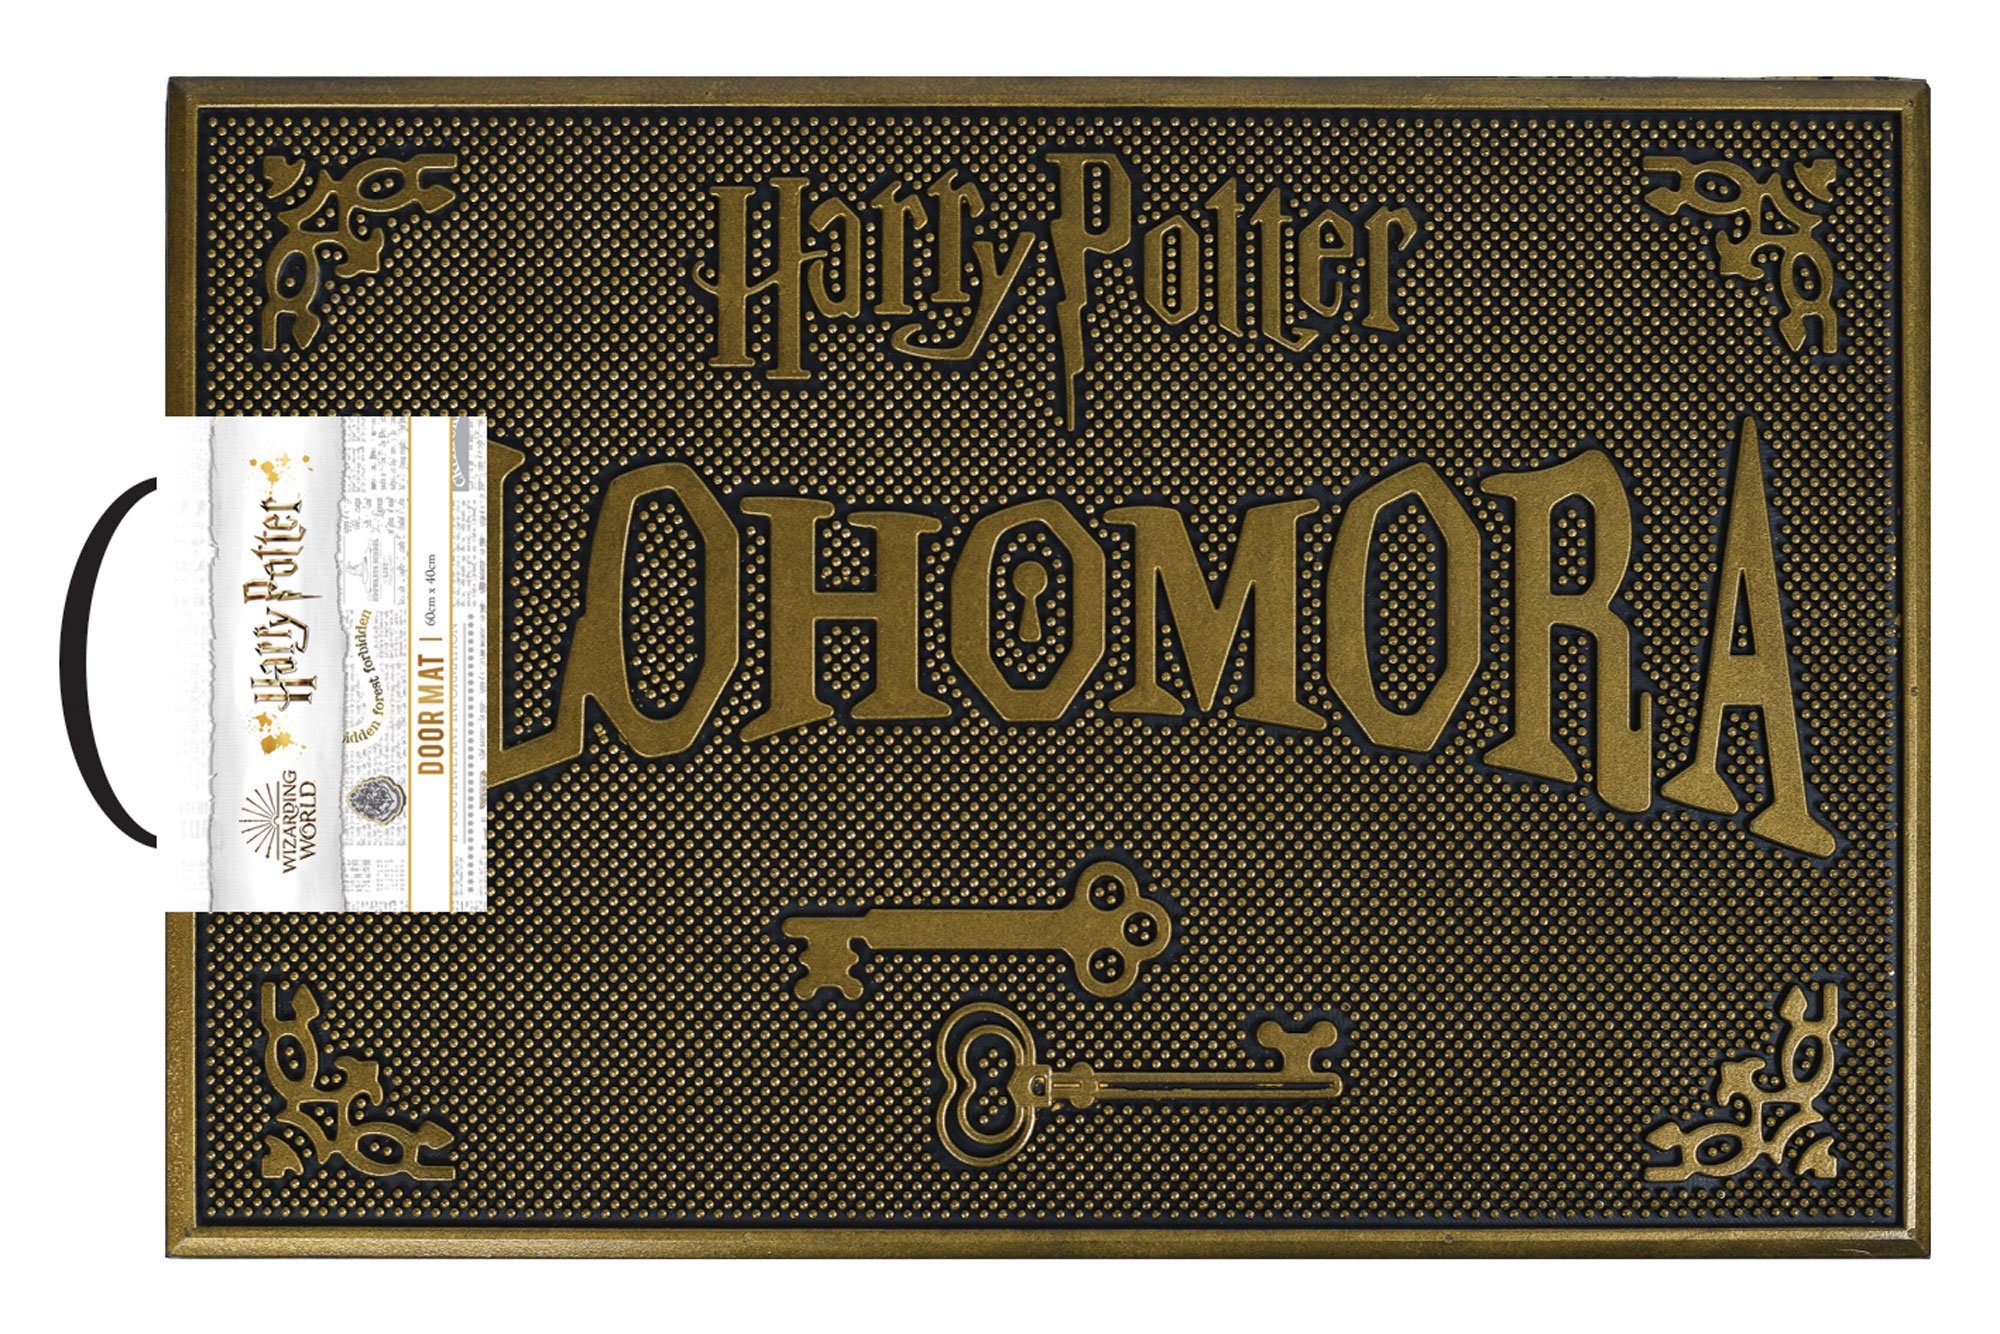 Fußmatte Gummitürmatte Harry Potter - Alohomora - 60 x 40 cm, empireposter